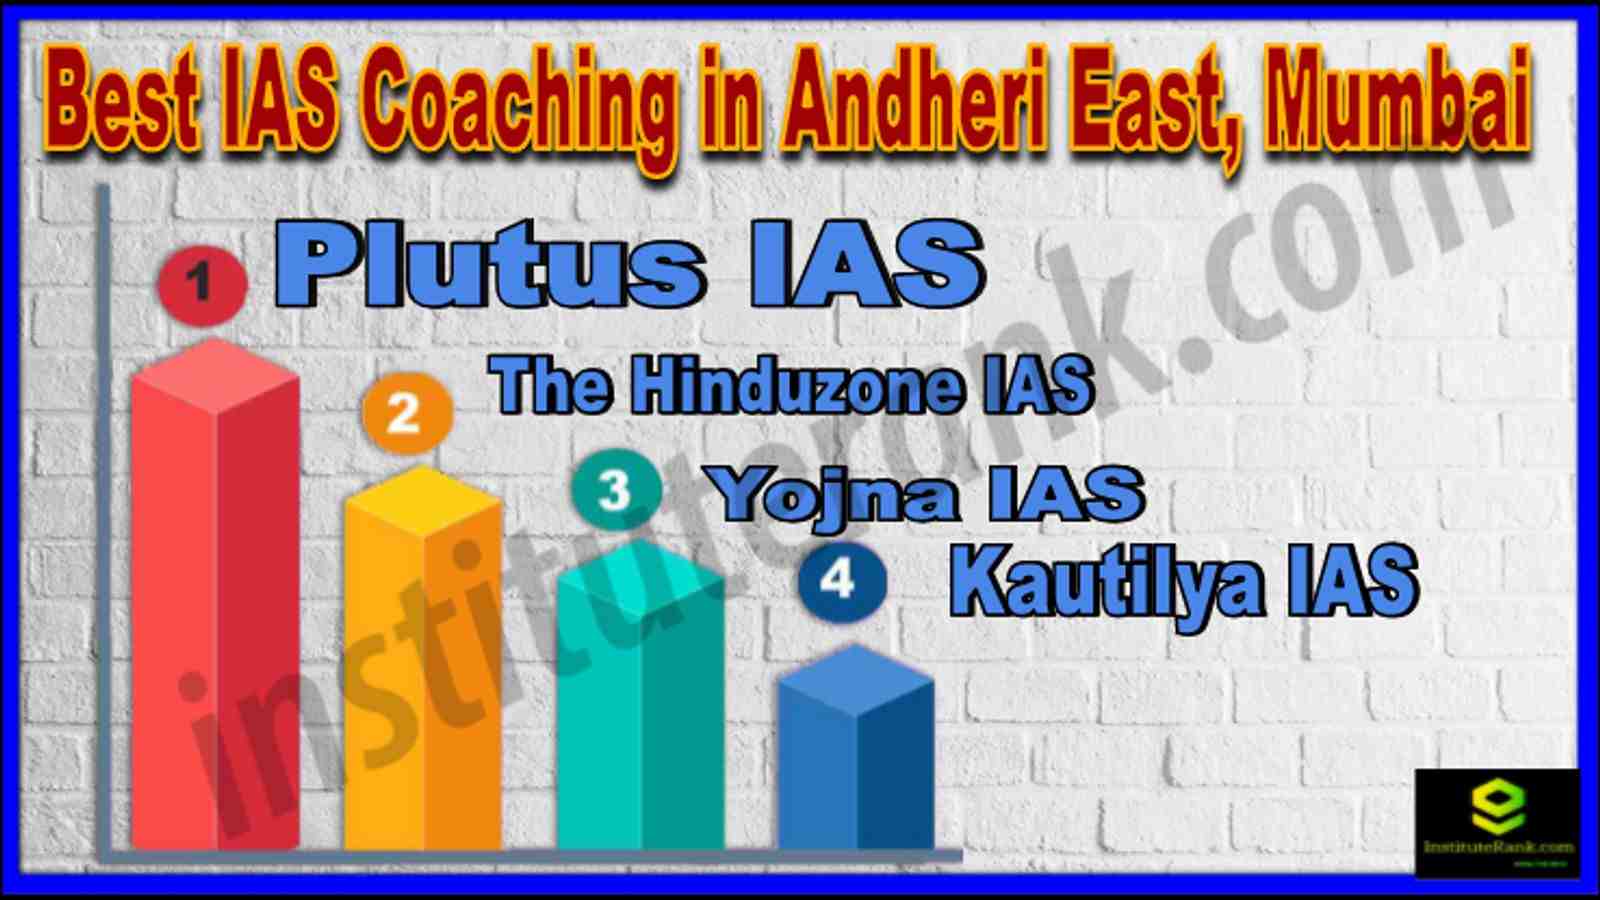 Best IAS coaching in Andheri East, Mumbai